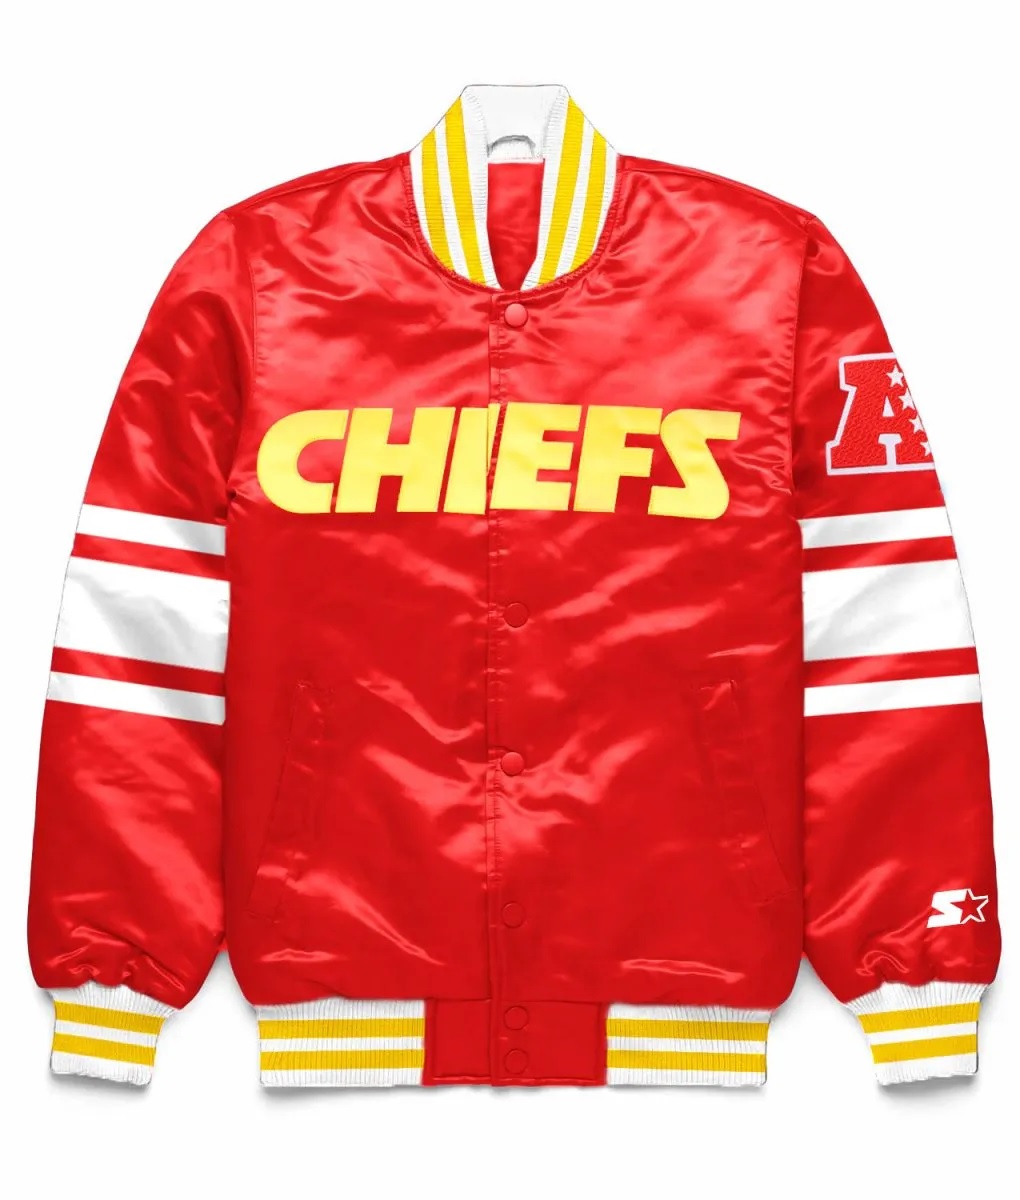 Cheerleaders Kansas City Chiefs Red Jacket